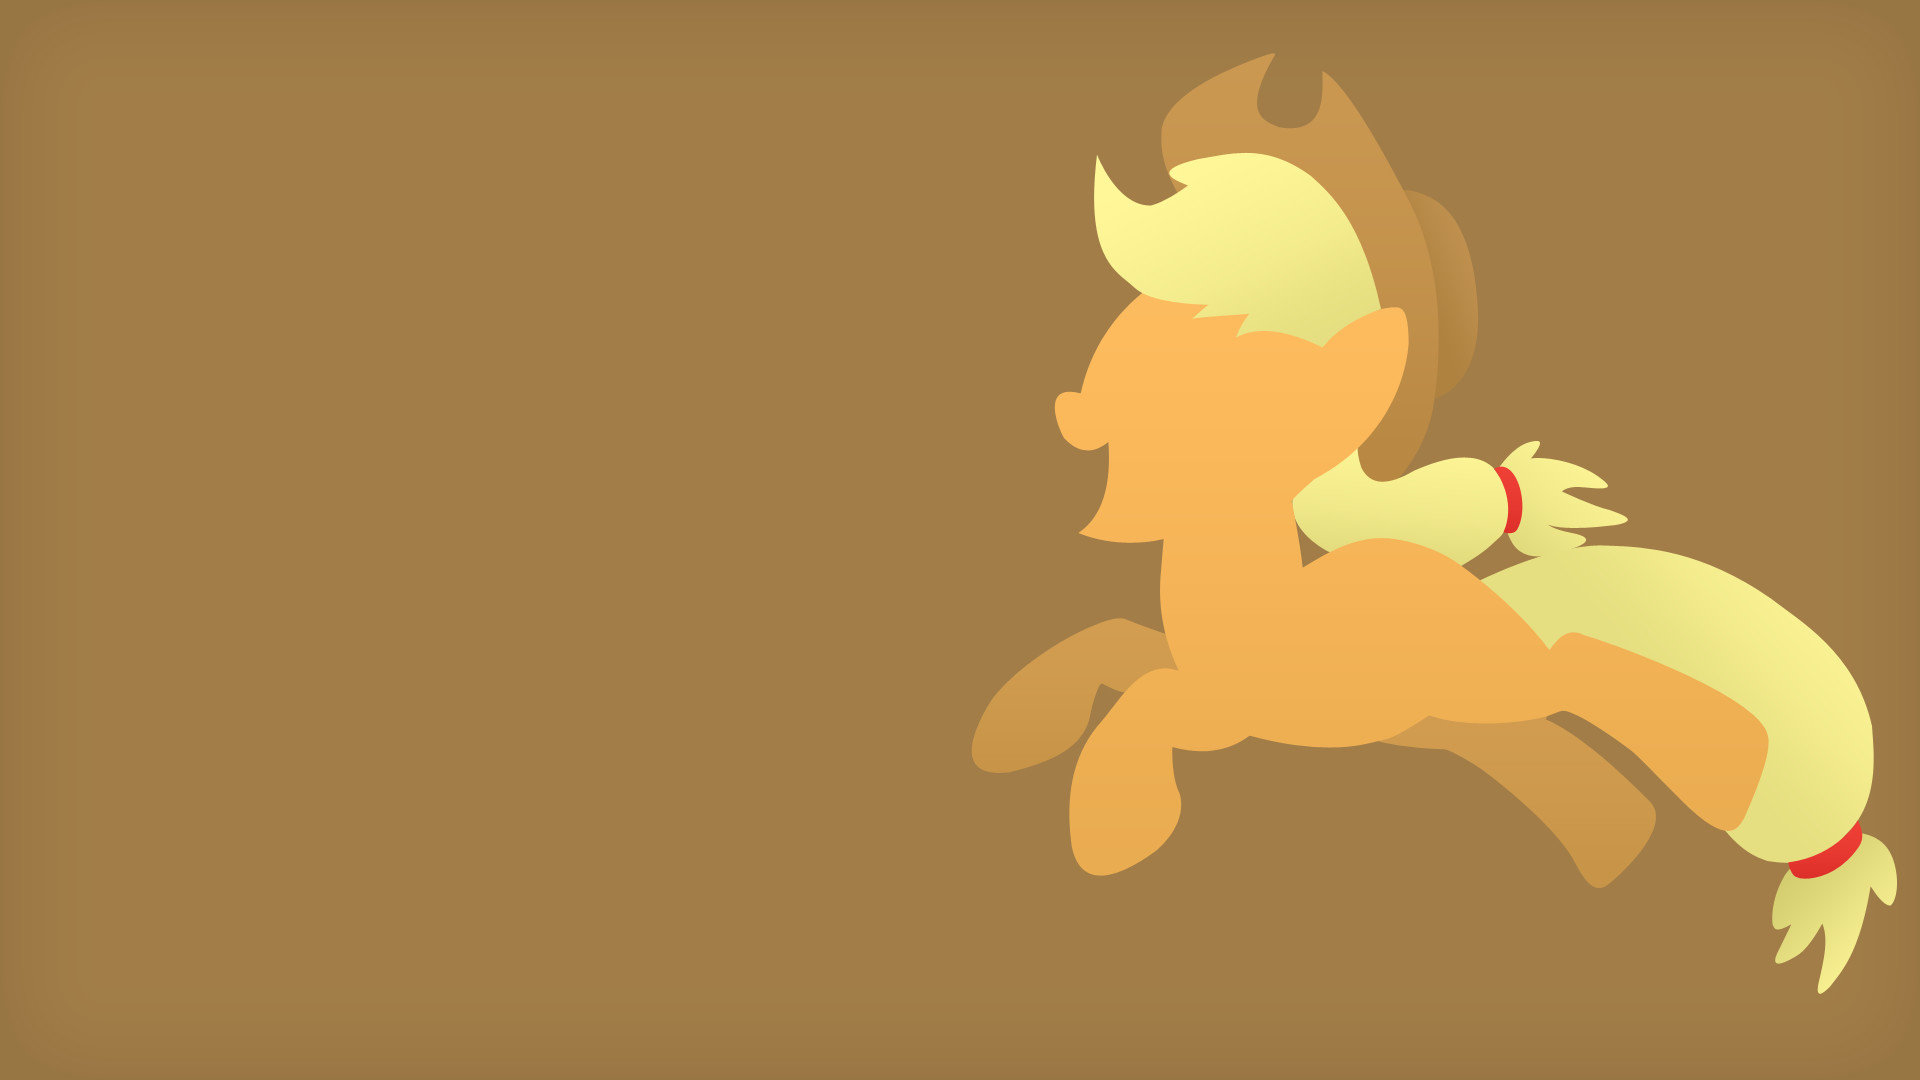 Best Applejack (My Little Pony) wallpaper ID:154611 for High Resolution hd 1080p computer